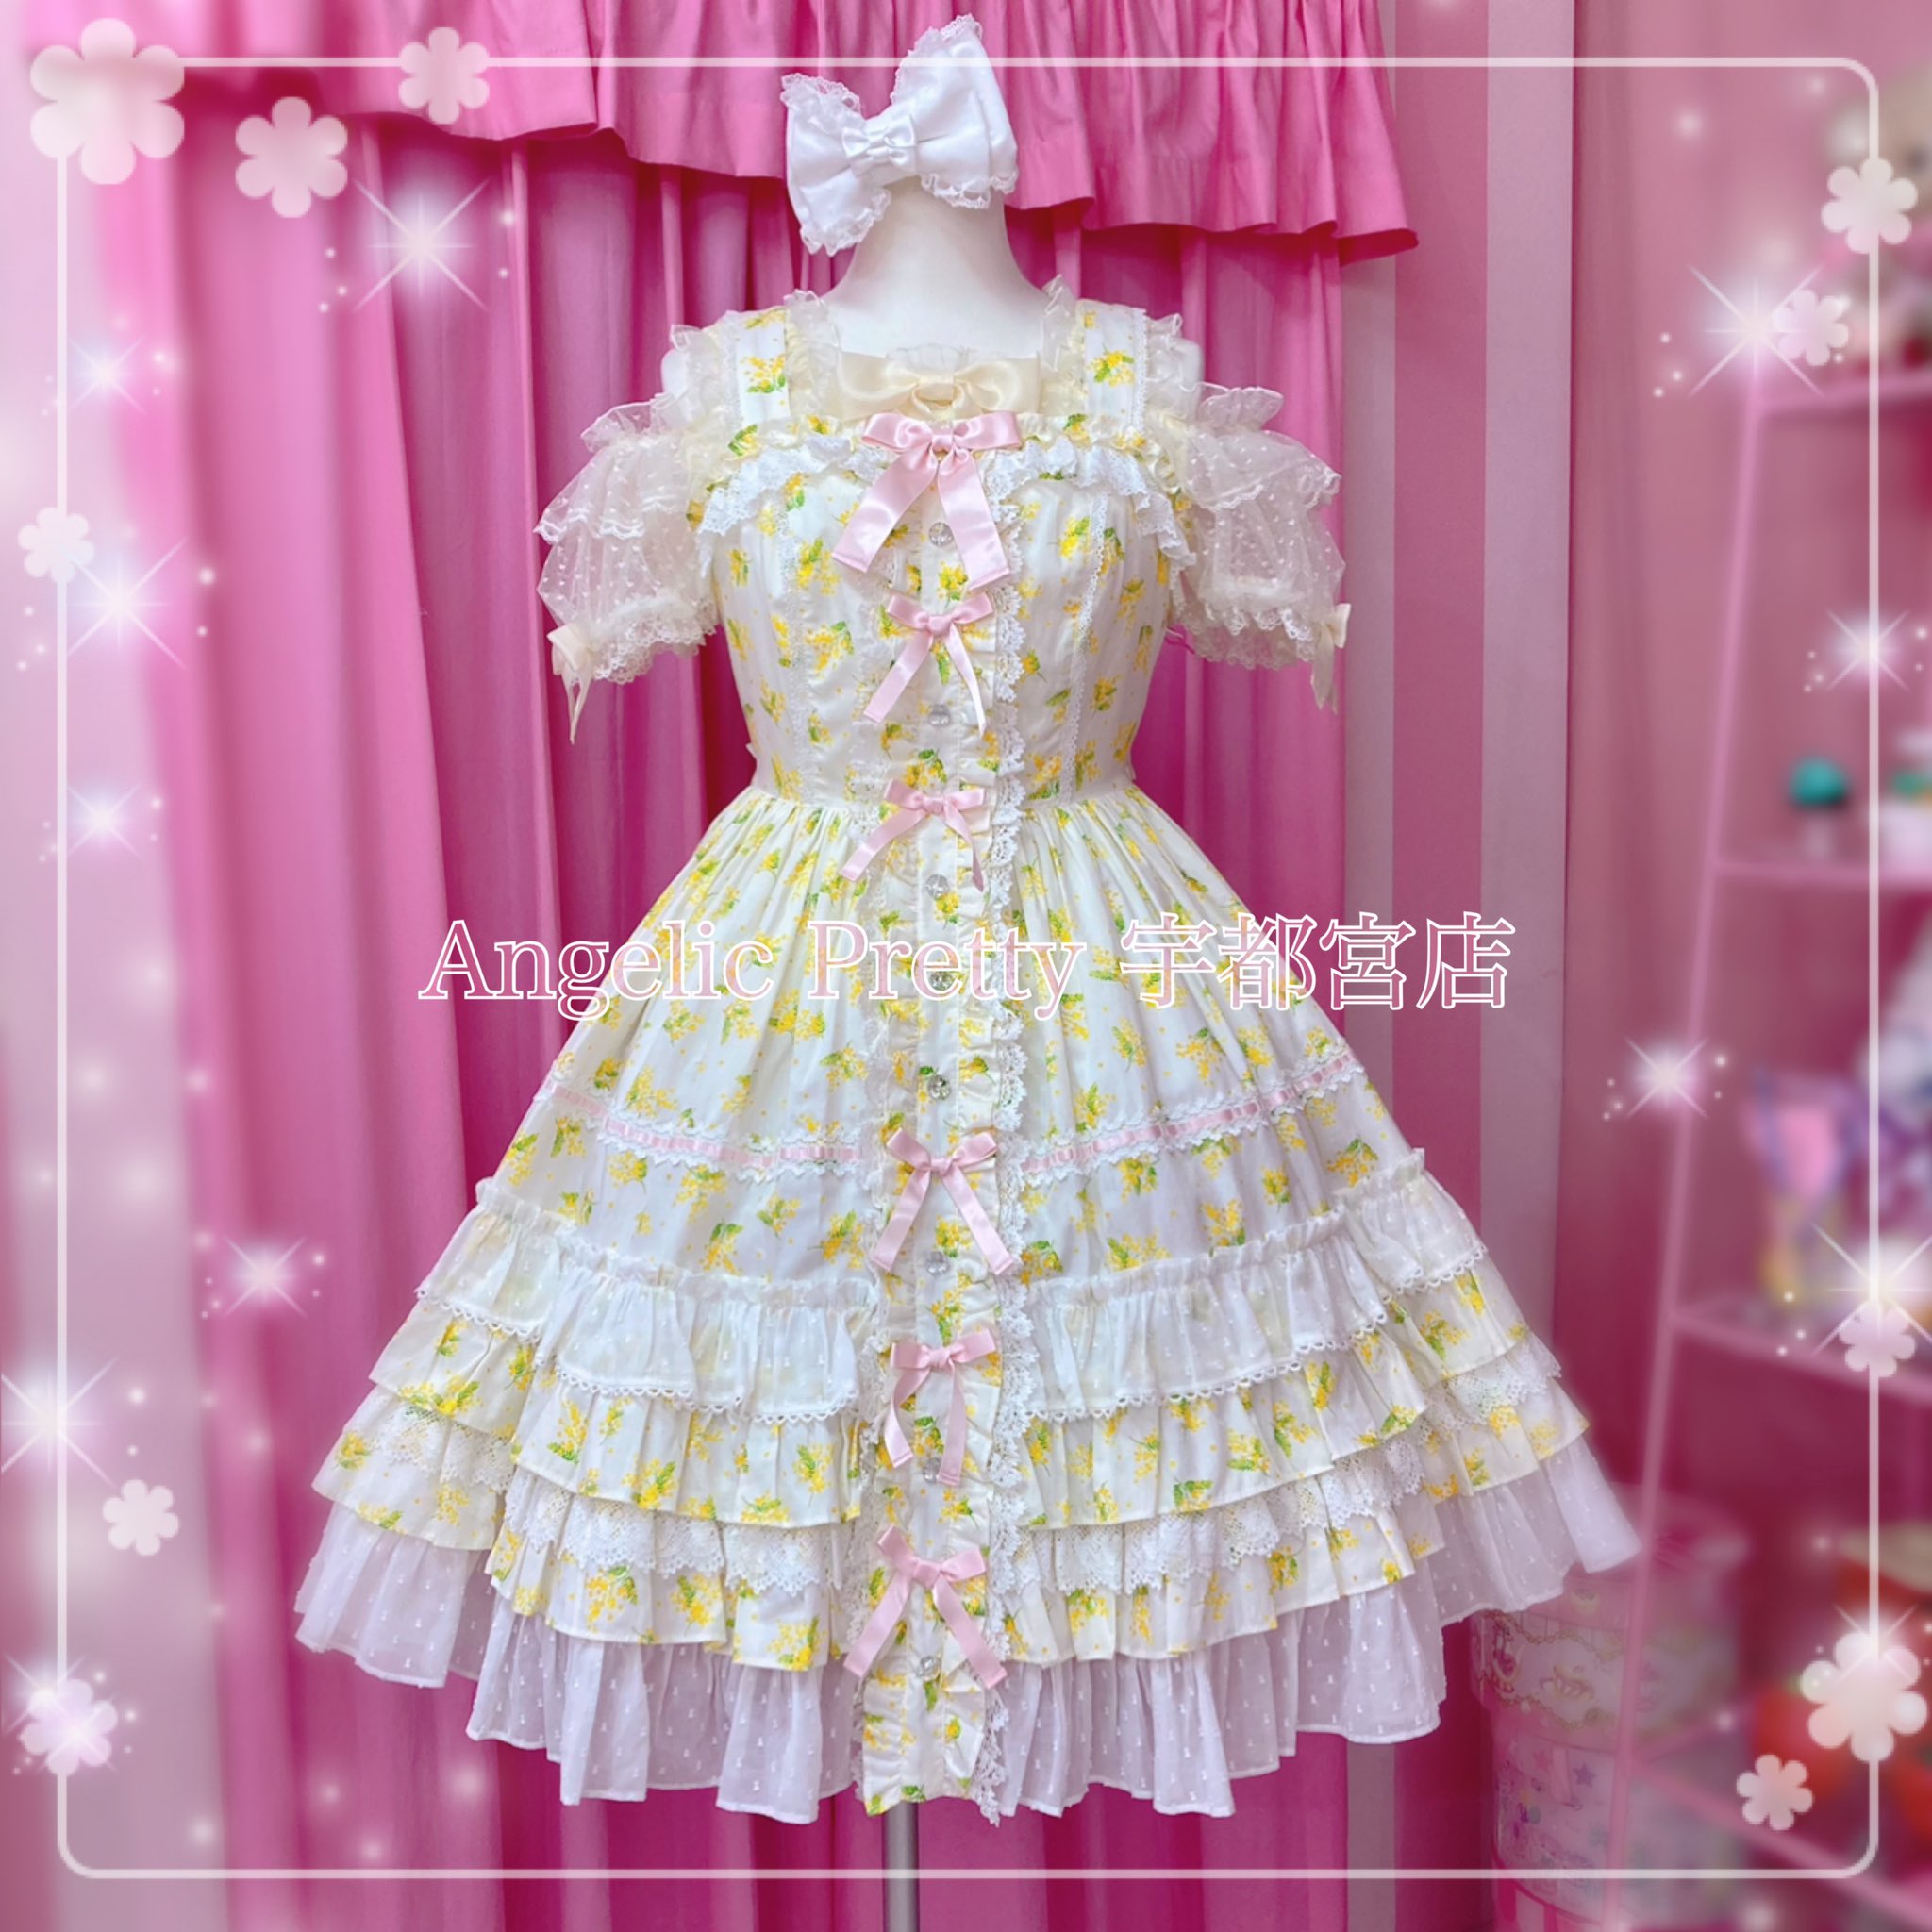 Angelic Pretty Flower Vacation ジャンパースカート